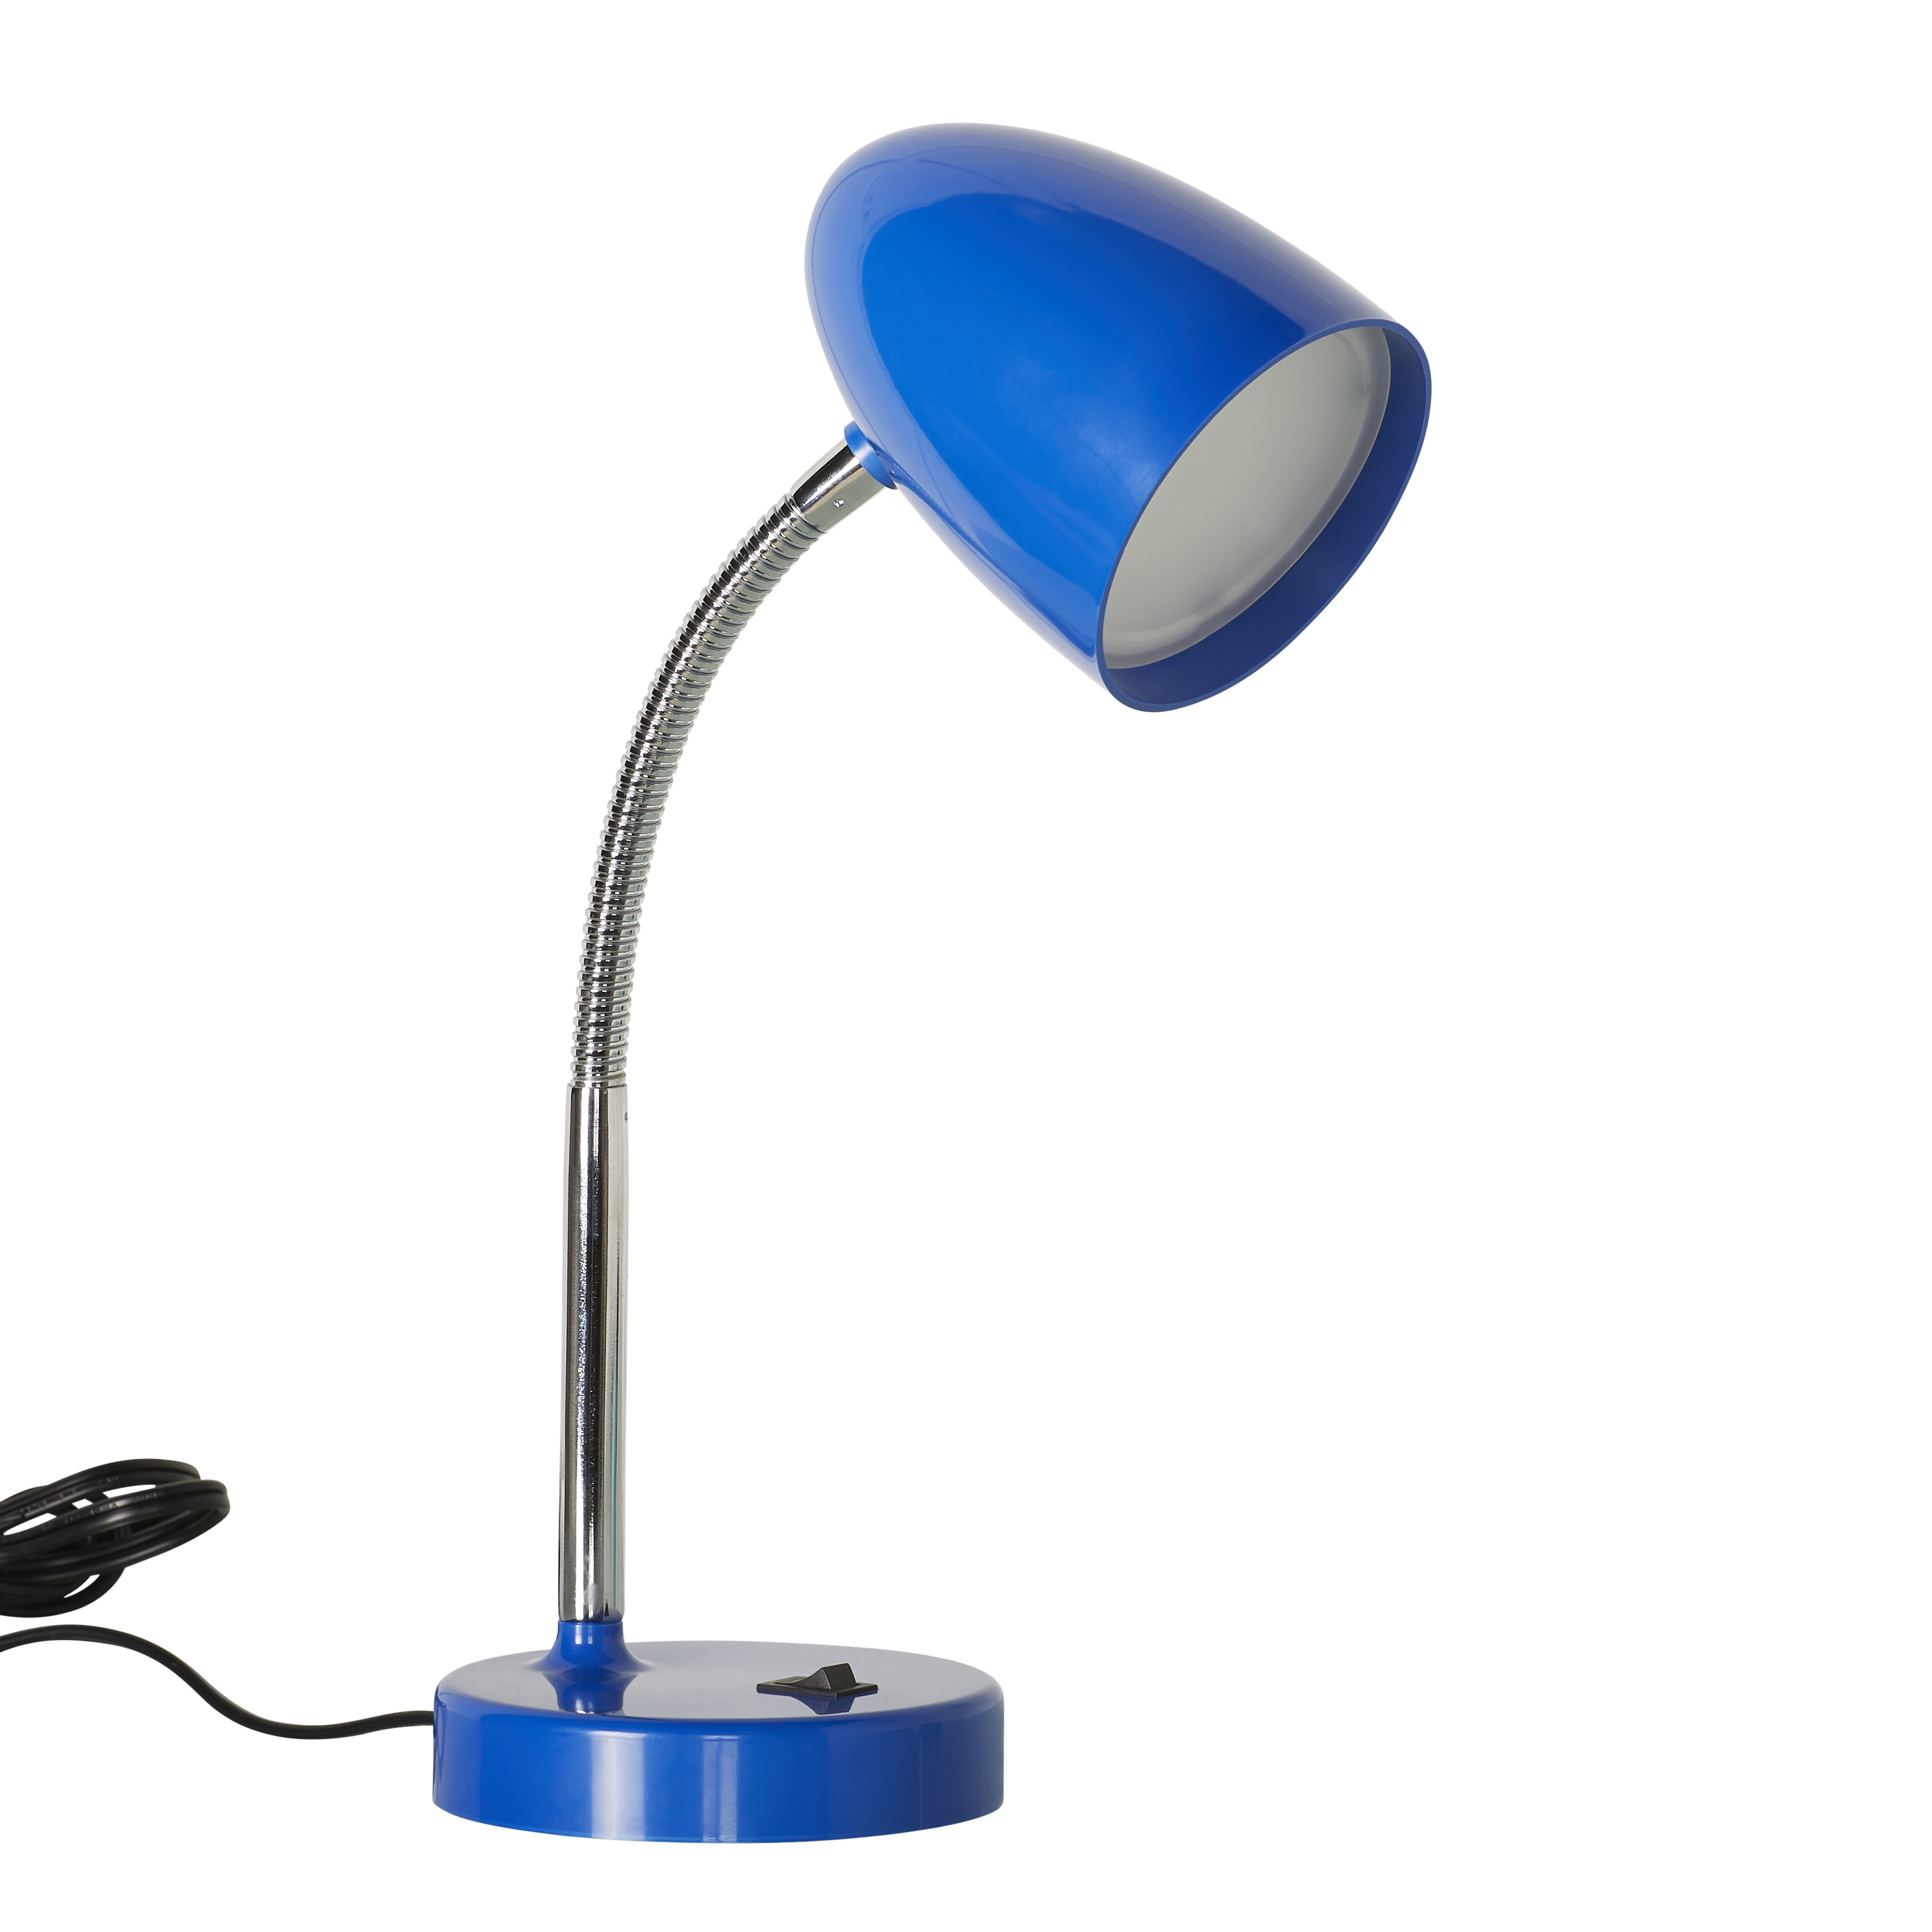 Best ideas about Led Desk Lamp Walmart
. Save or Pin Mainstays LED Desk Lamp Blue Walmart Now.